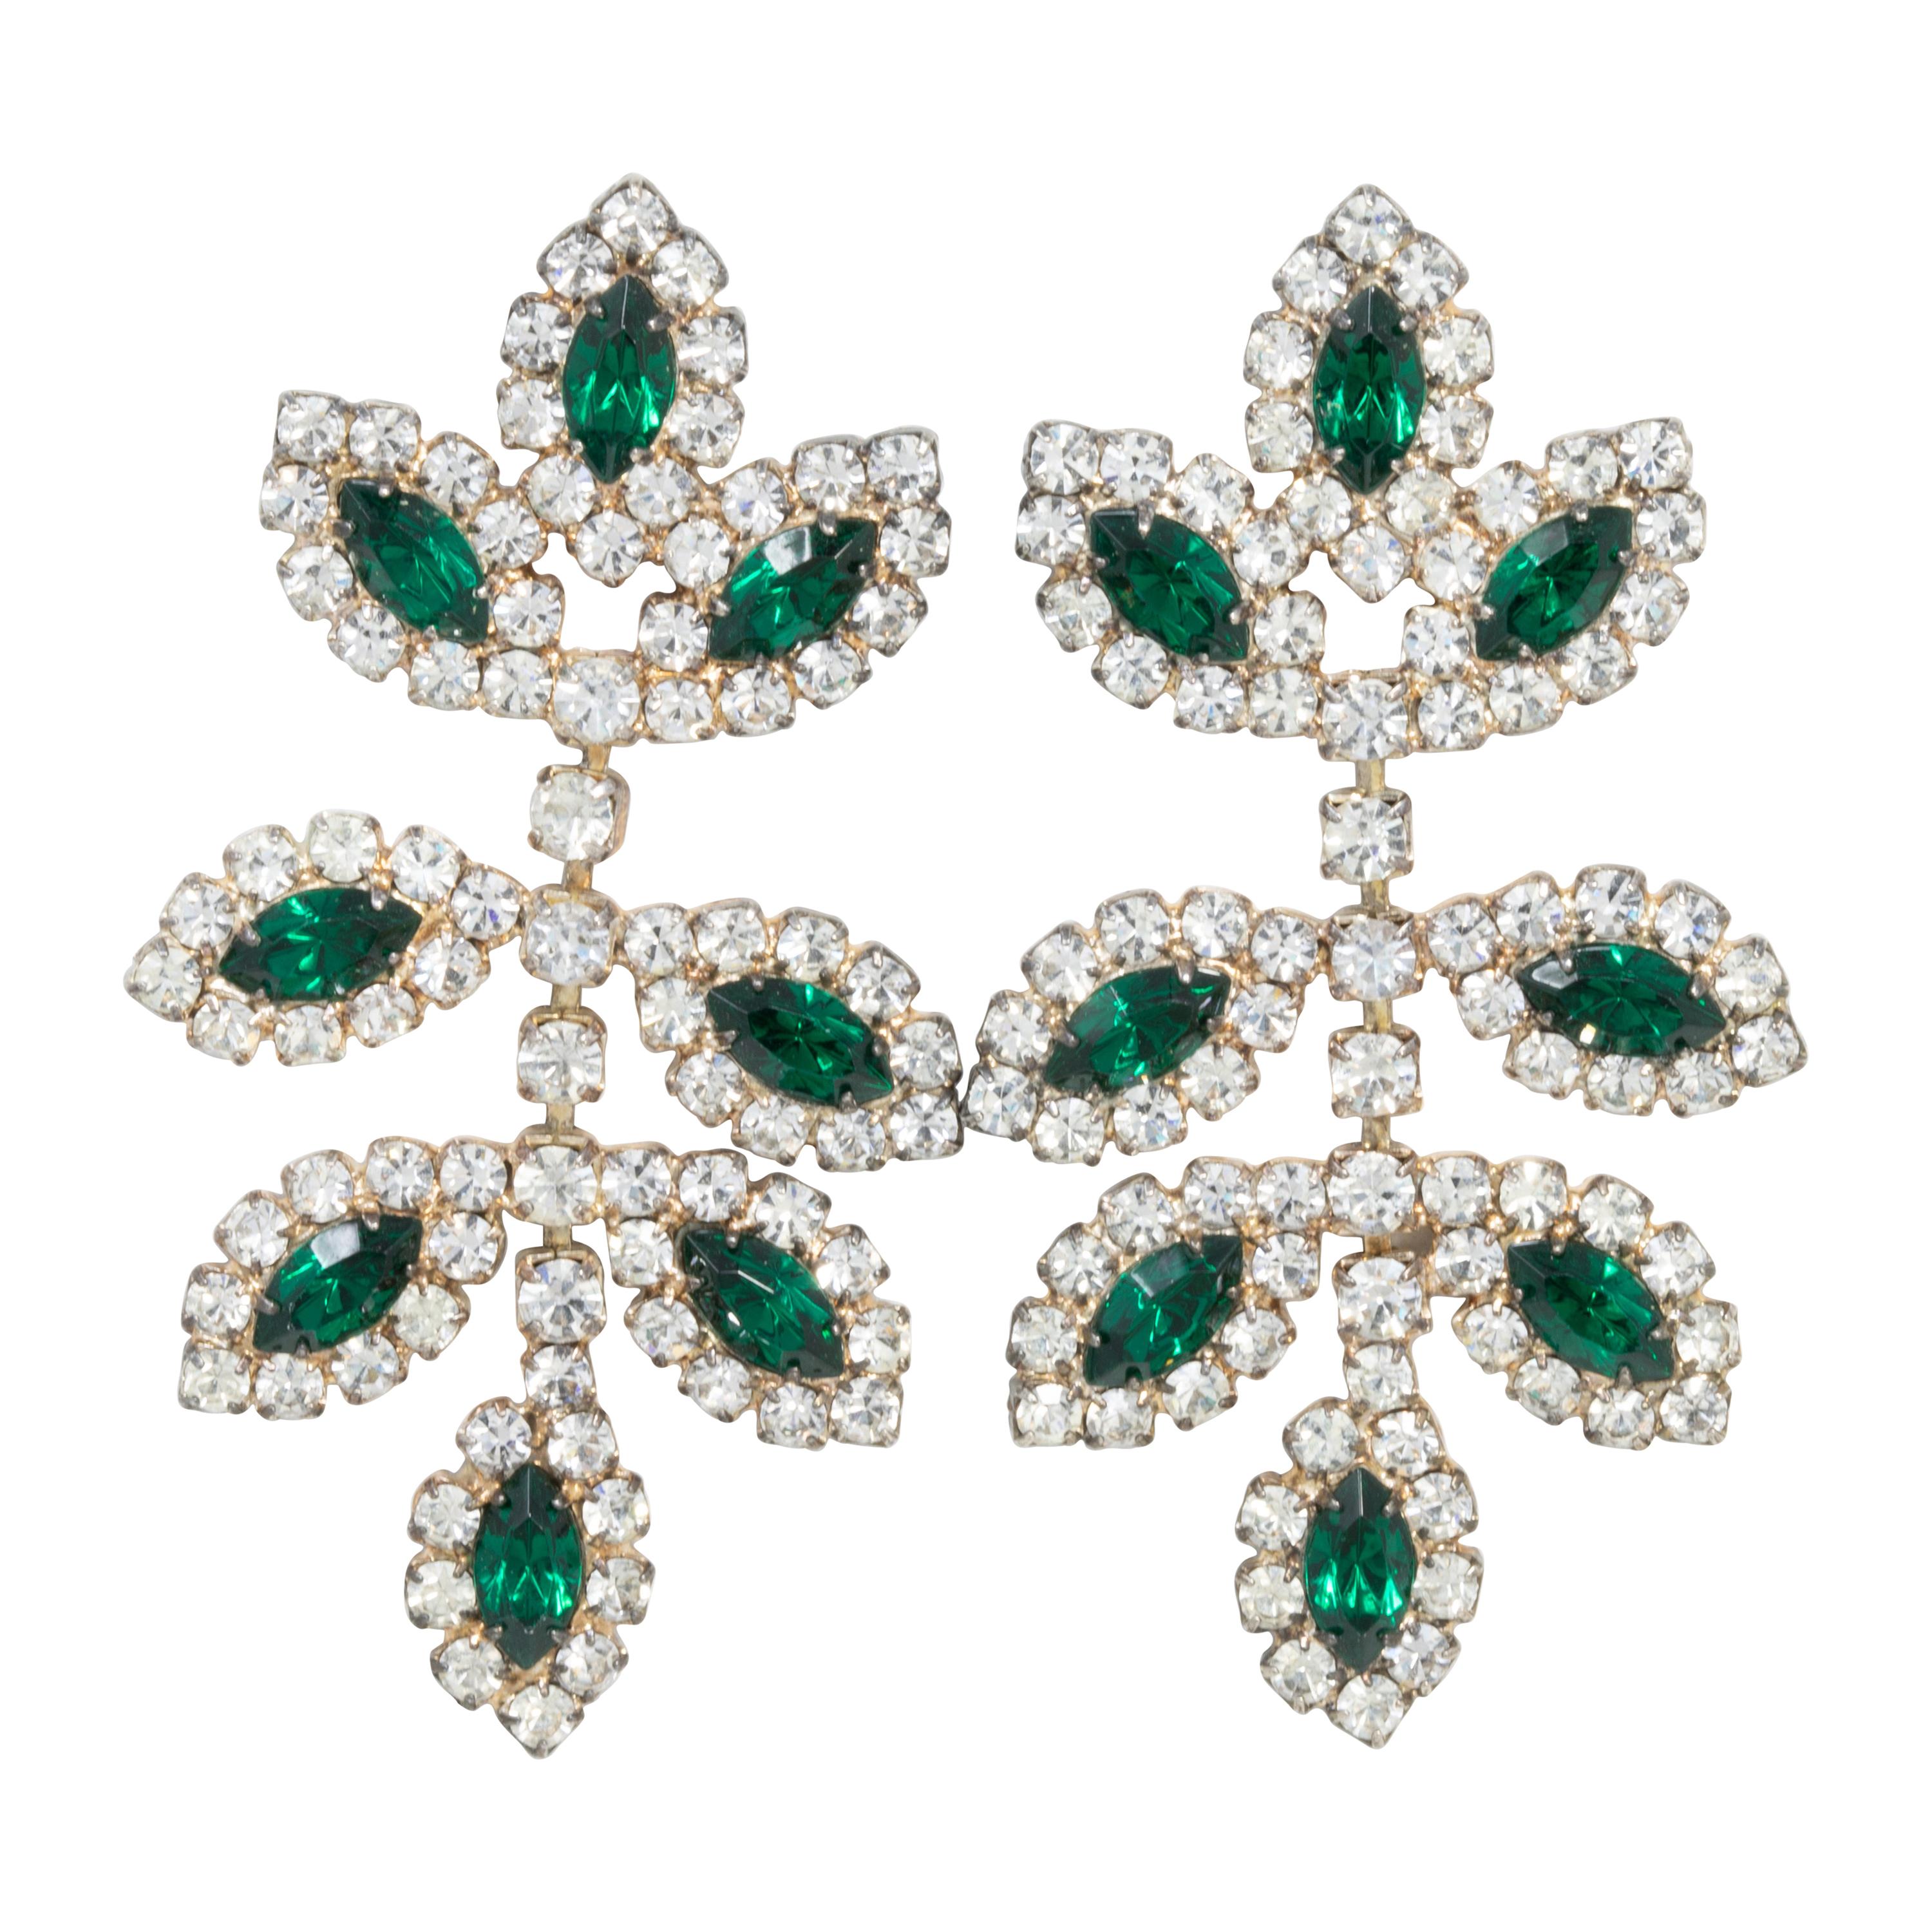 KJL Kenneth Jay Lane Emerald Crystal Leaf Drop Earrings, Mid-Late 1900s, Posts